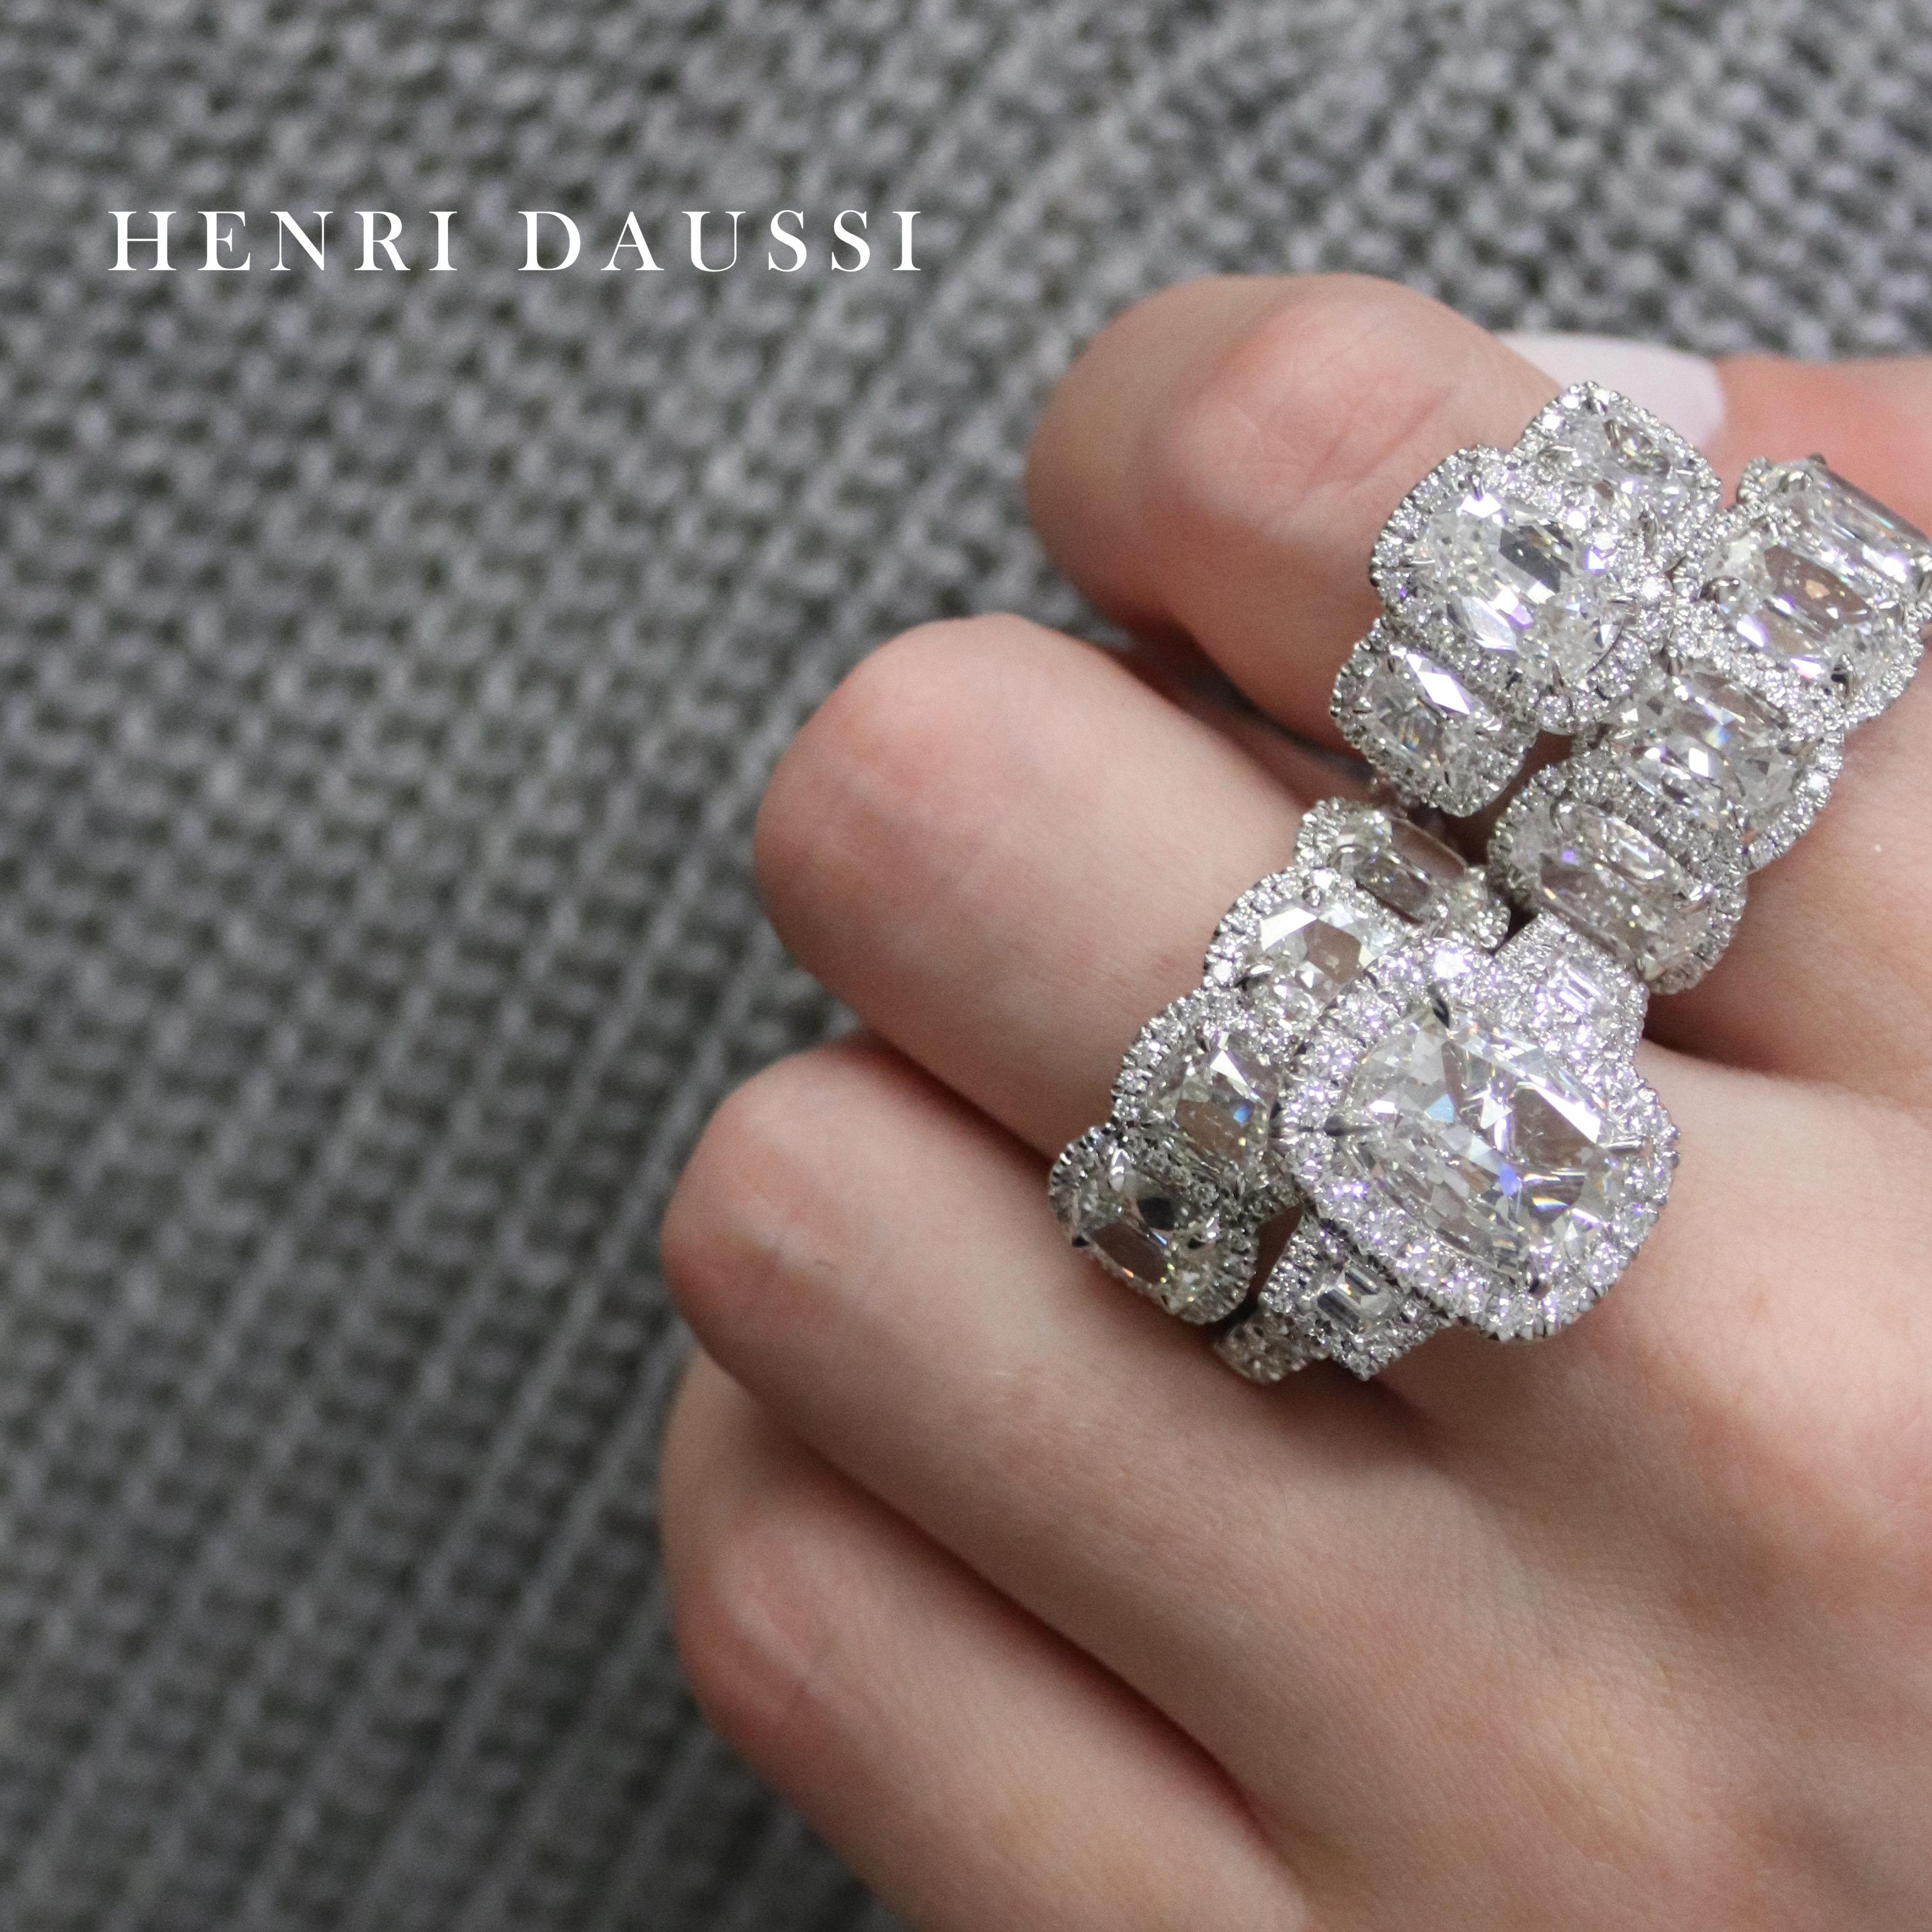 Modern Classic Trilogy Henri Daussi Engagement Ring Features 3 Cushion Cut Diamonds